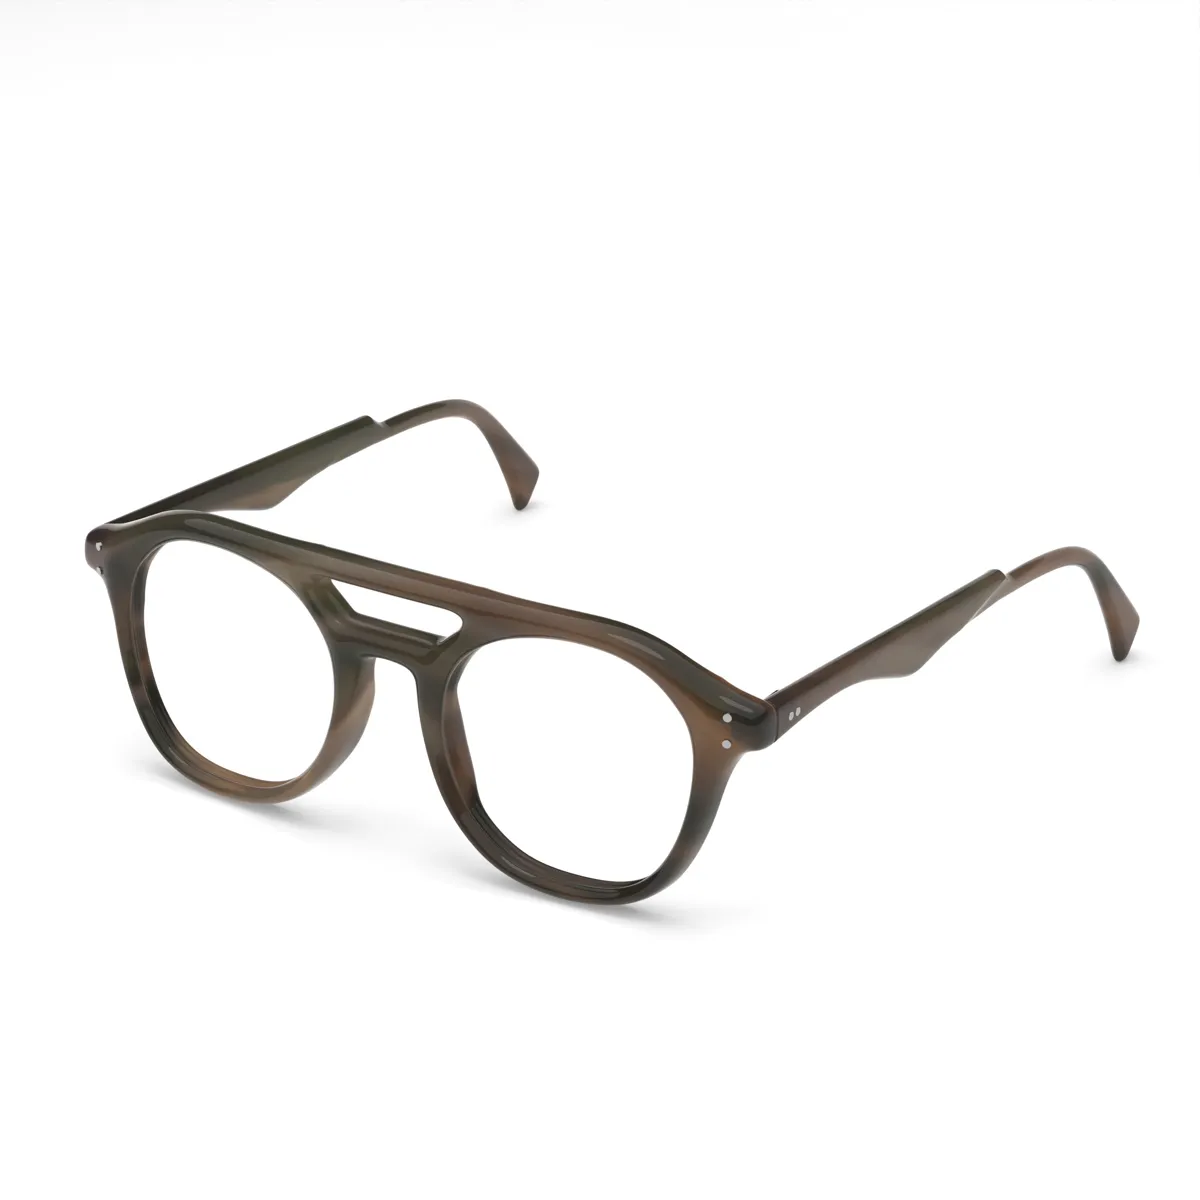 FL 4 Formal Eyeglasses